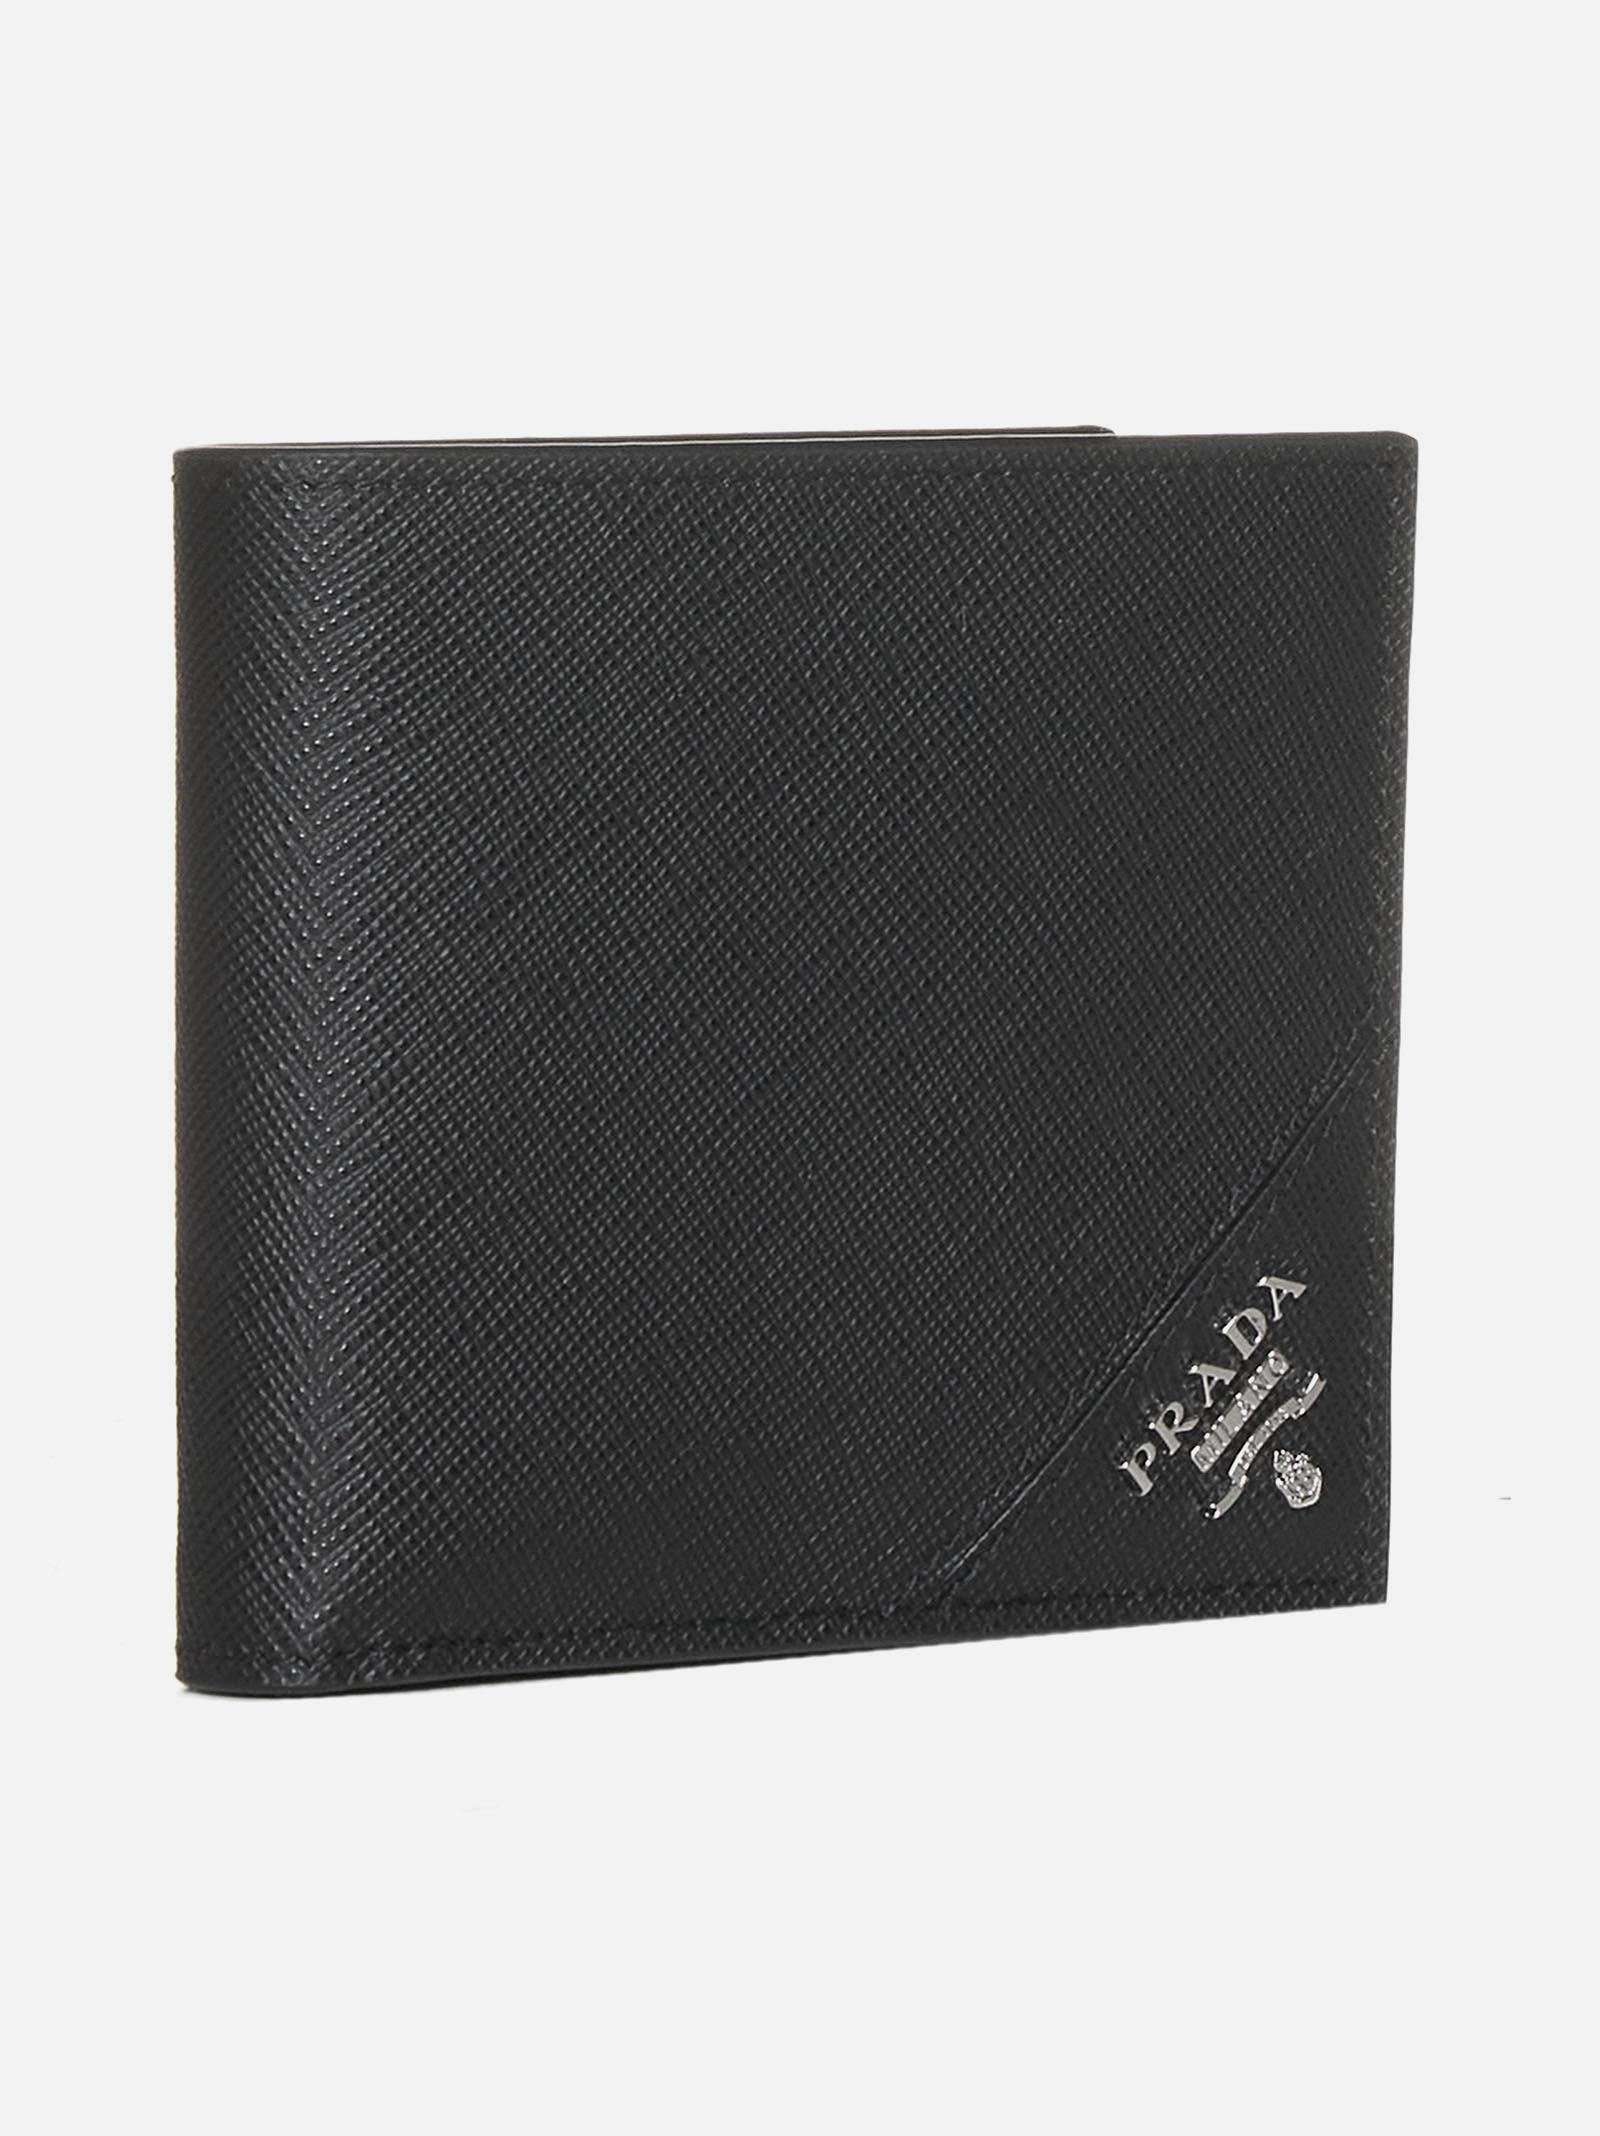 Prada Saffiano Leather Bifold Wallet in Black for Men | Lyst